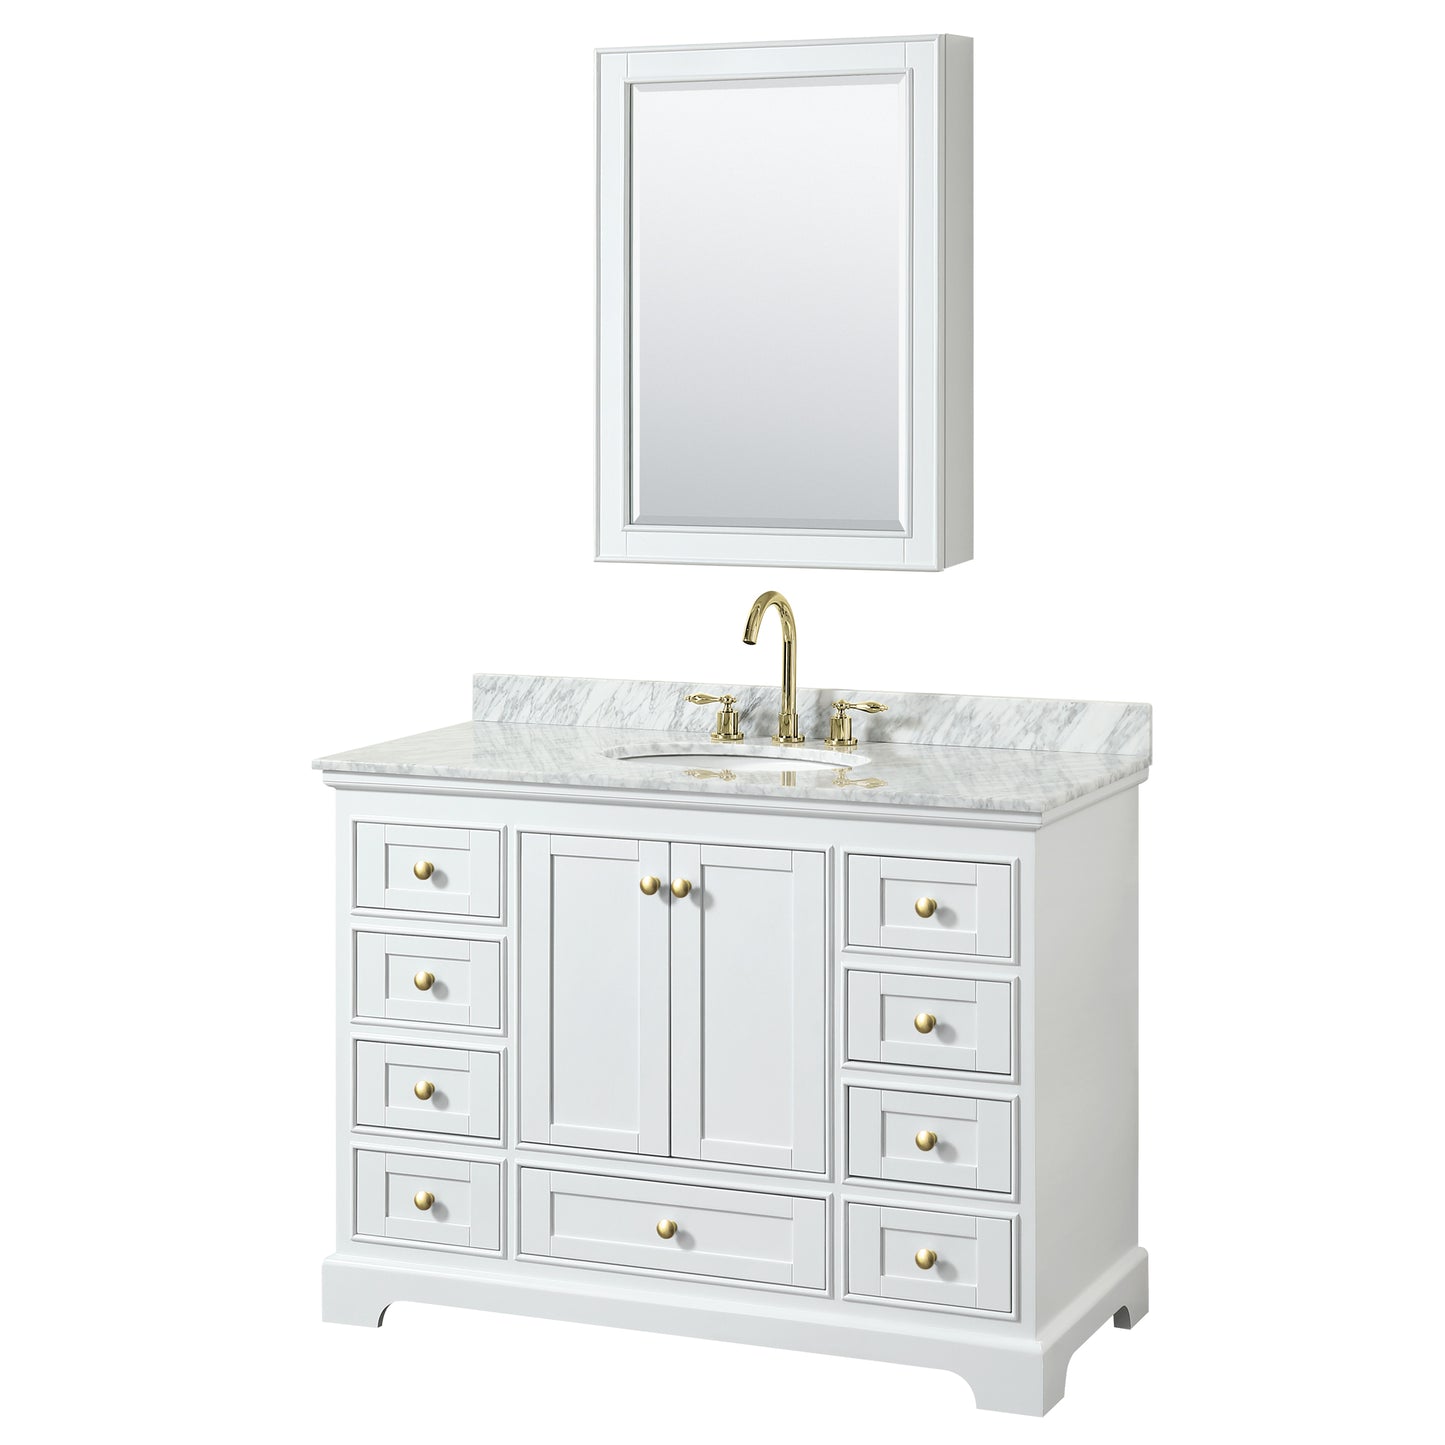 Wyndham Collection Deborah 48 Inch Single Bathroom Vanity in White, White Carrara Marble Countertop, Undermount Oval Sink, Brushed Gold Trim - Luxe Bathroom Vanities